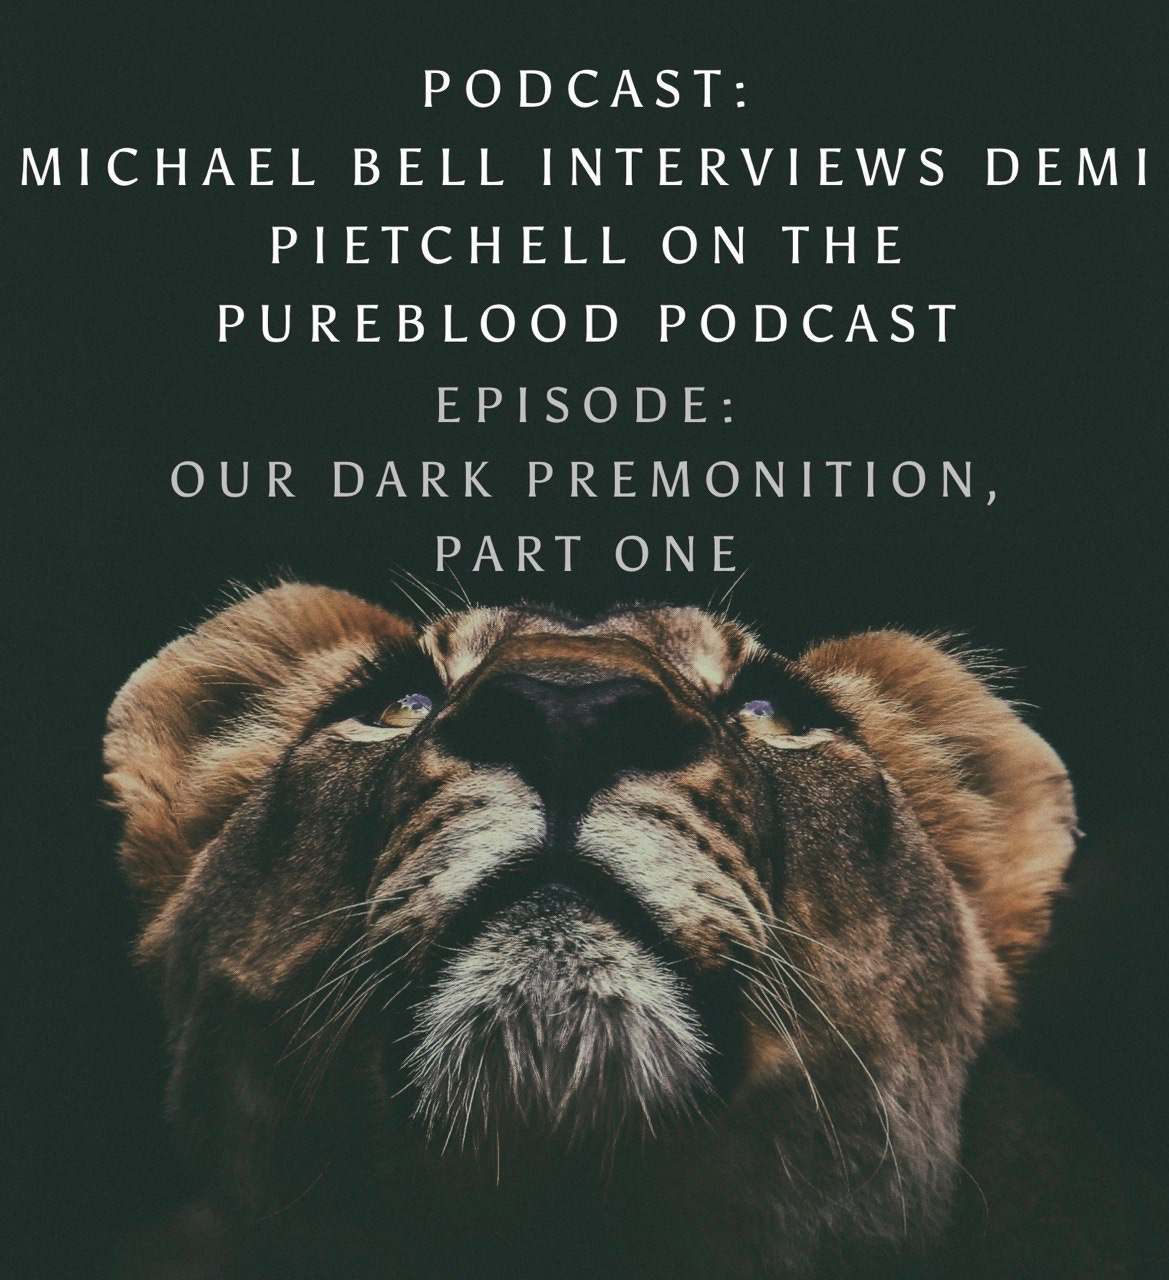 The Pureblood Podcast Episode Our Dark Premonition Part One